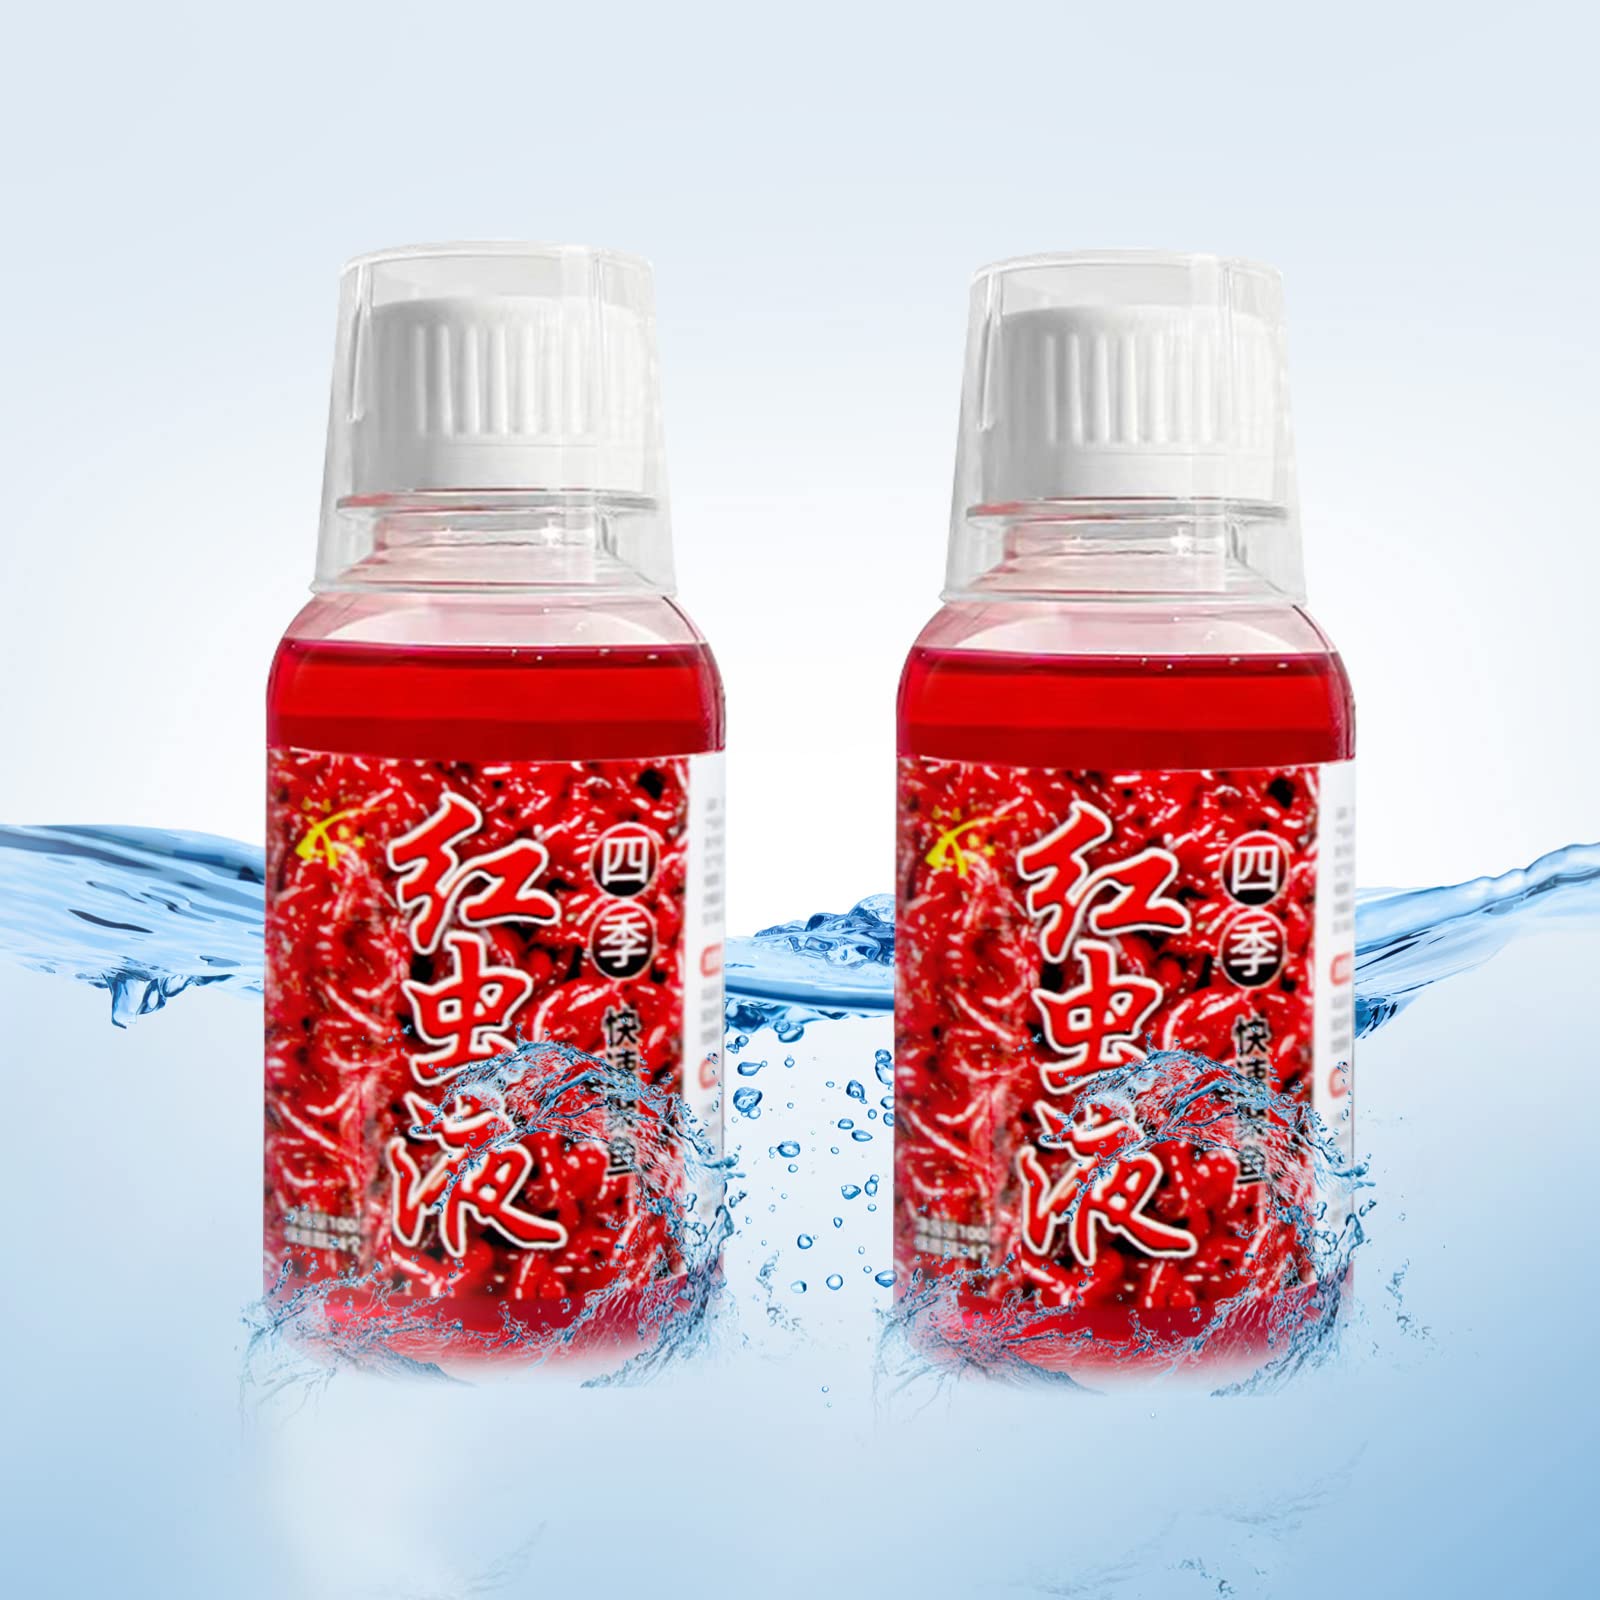 Red Worm Liquid Bait, 100ml Red Worm Liquid Scent Fish